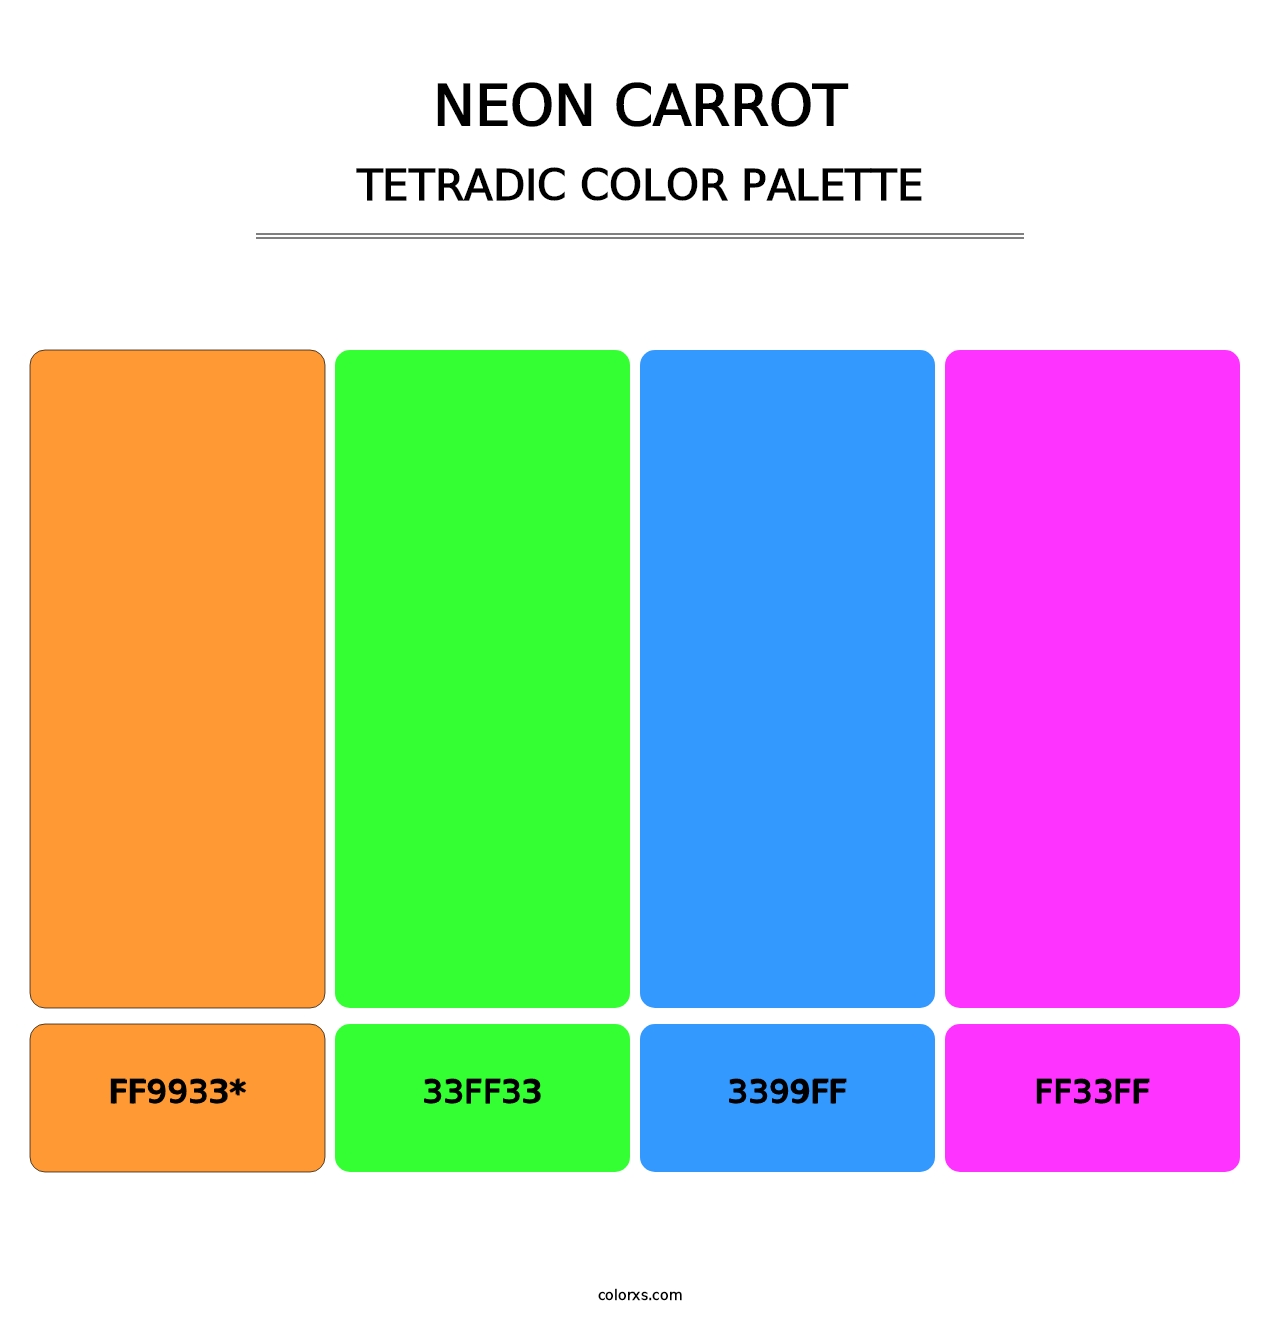 Neon Carrot - Tetradic Color Palette